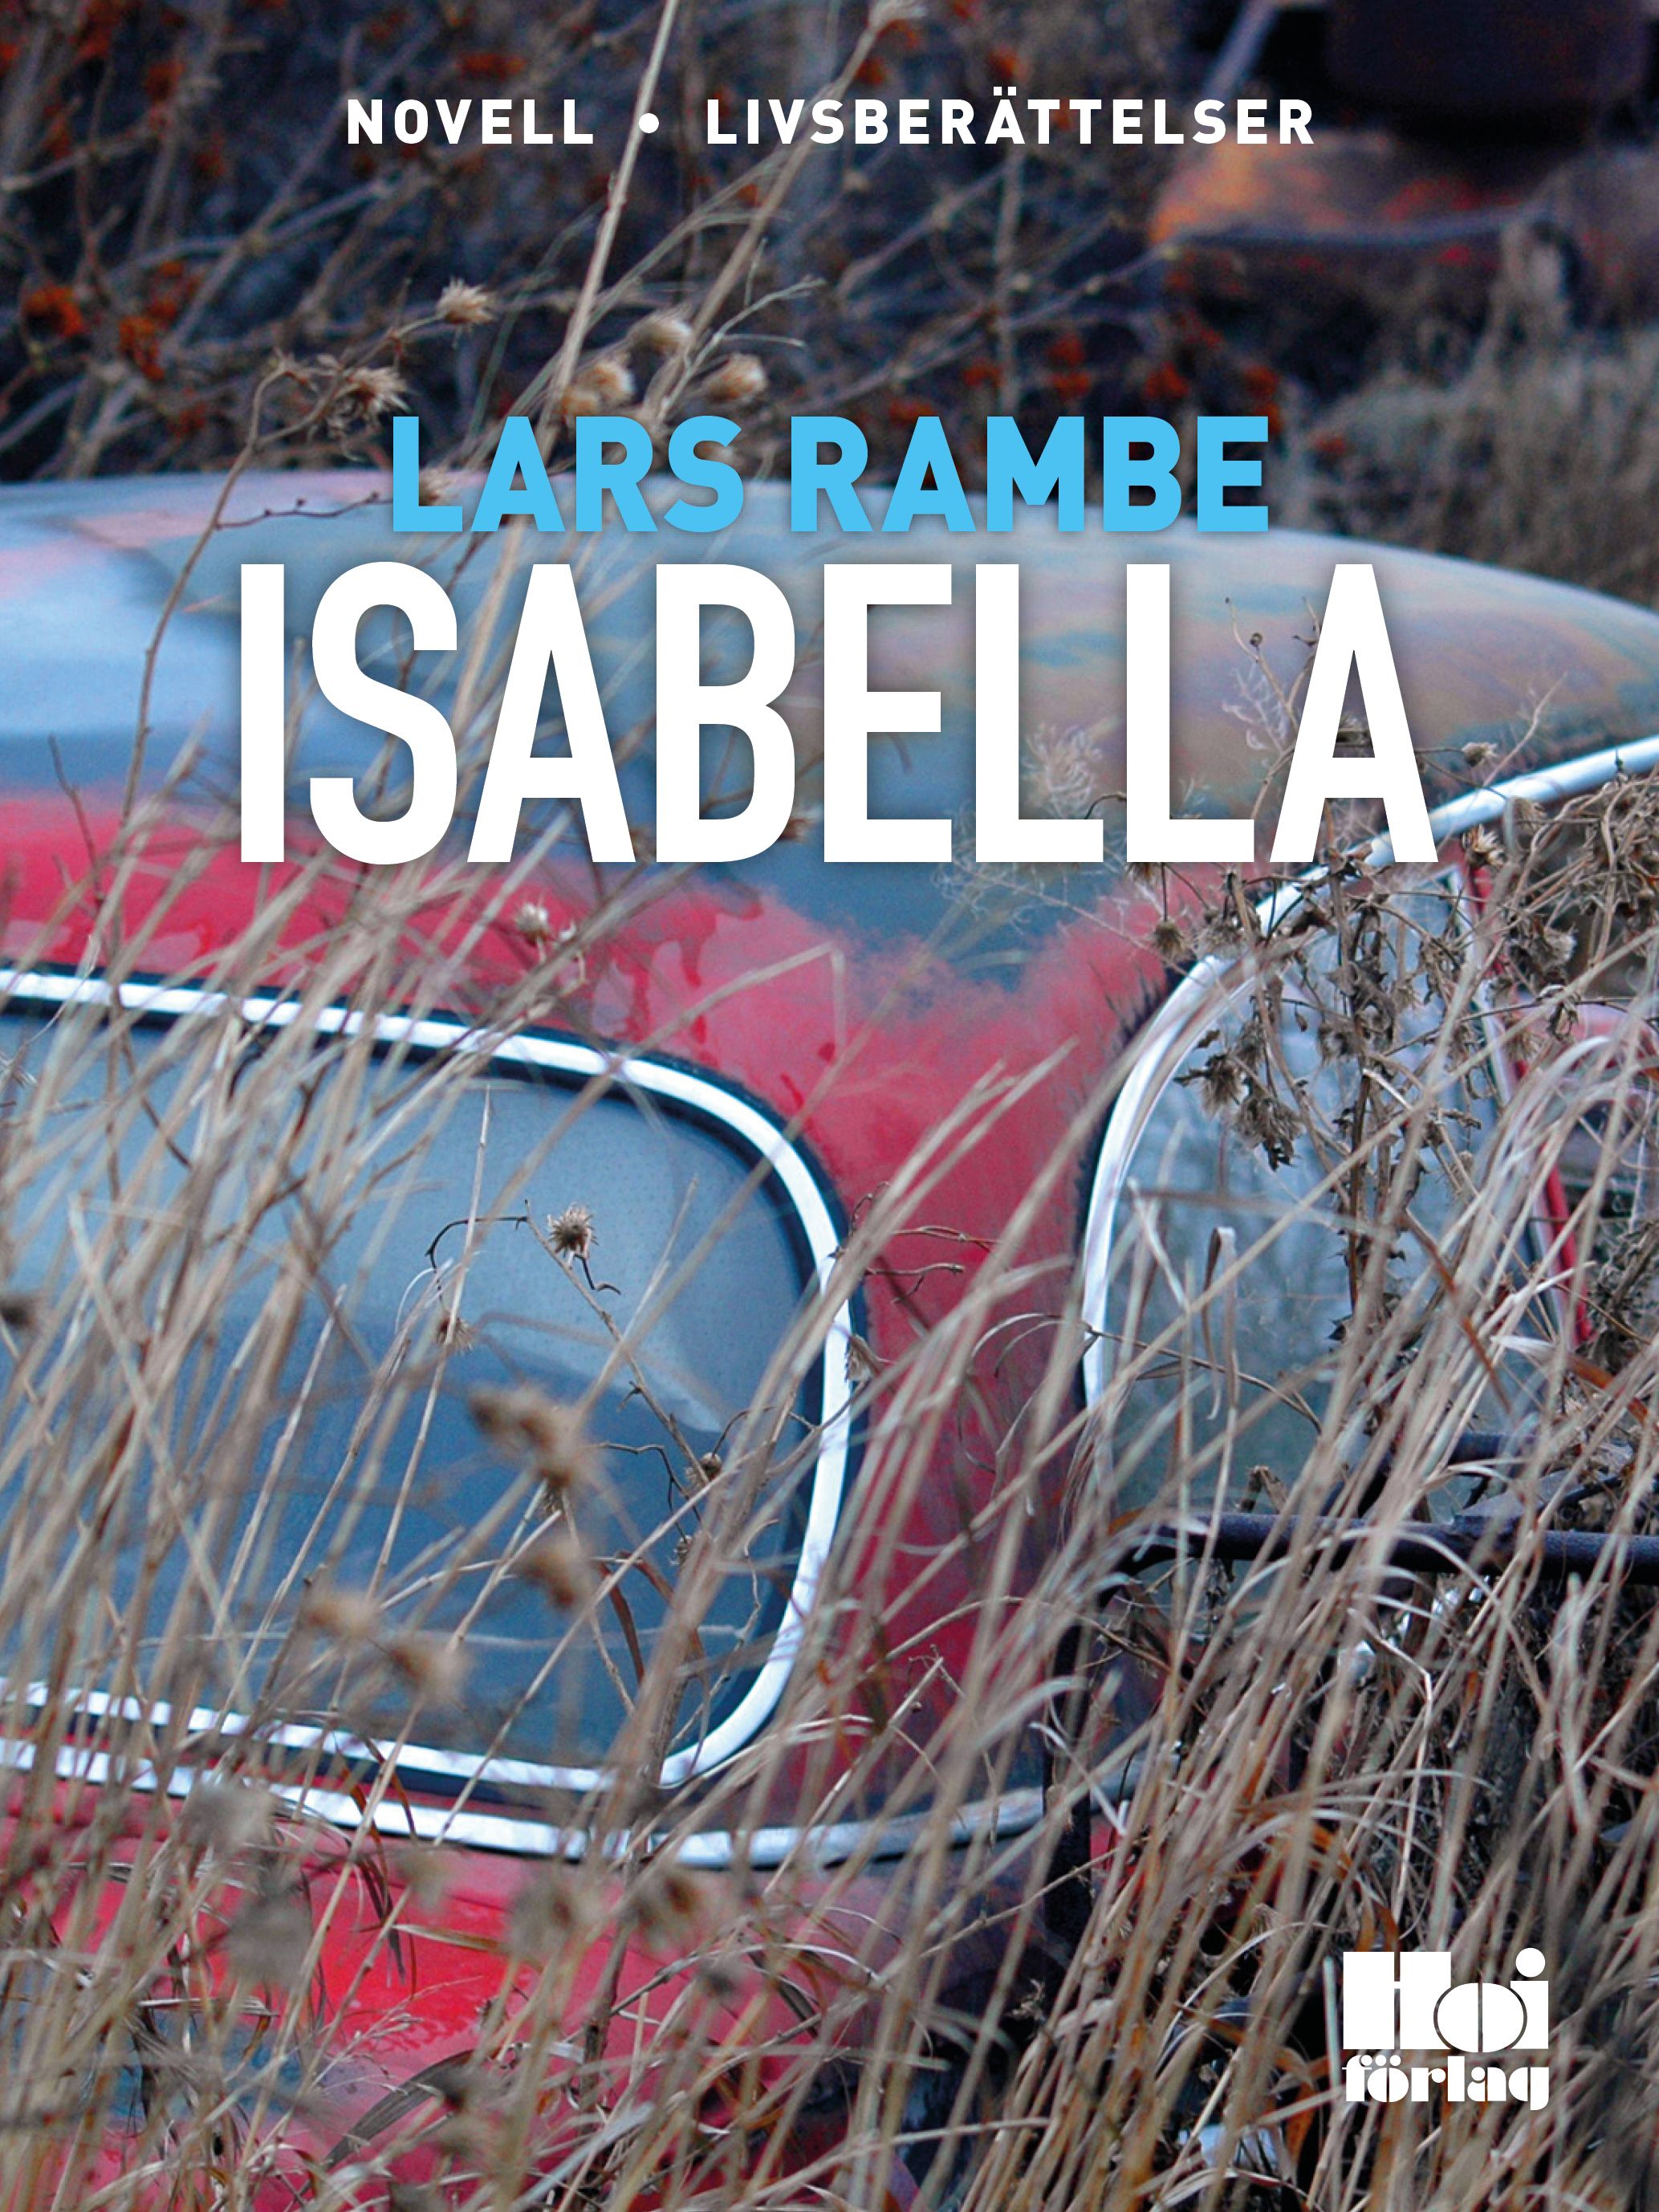 Isabella, eBook by Lars Rambe